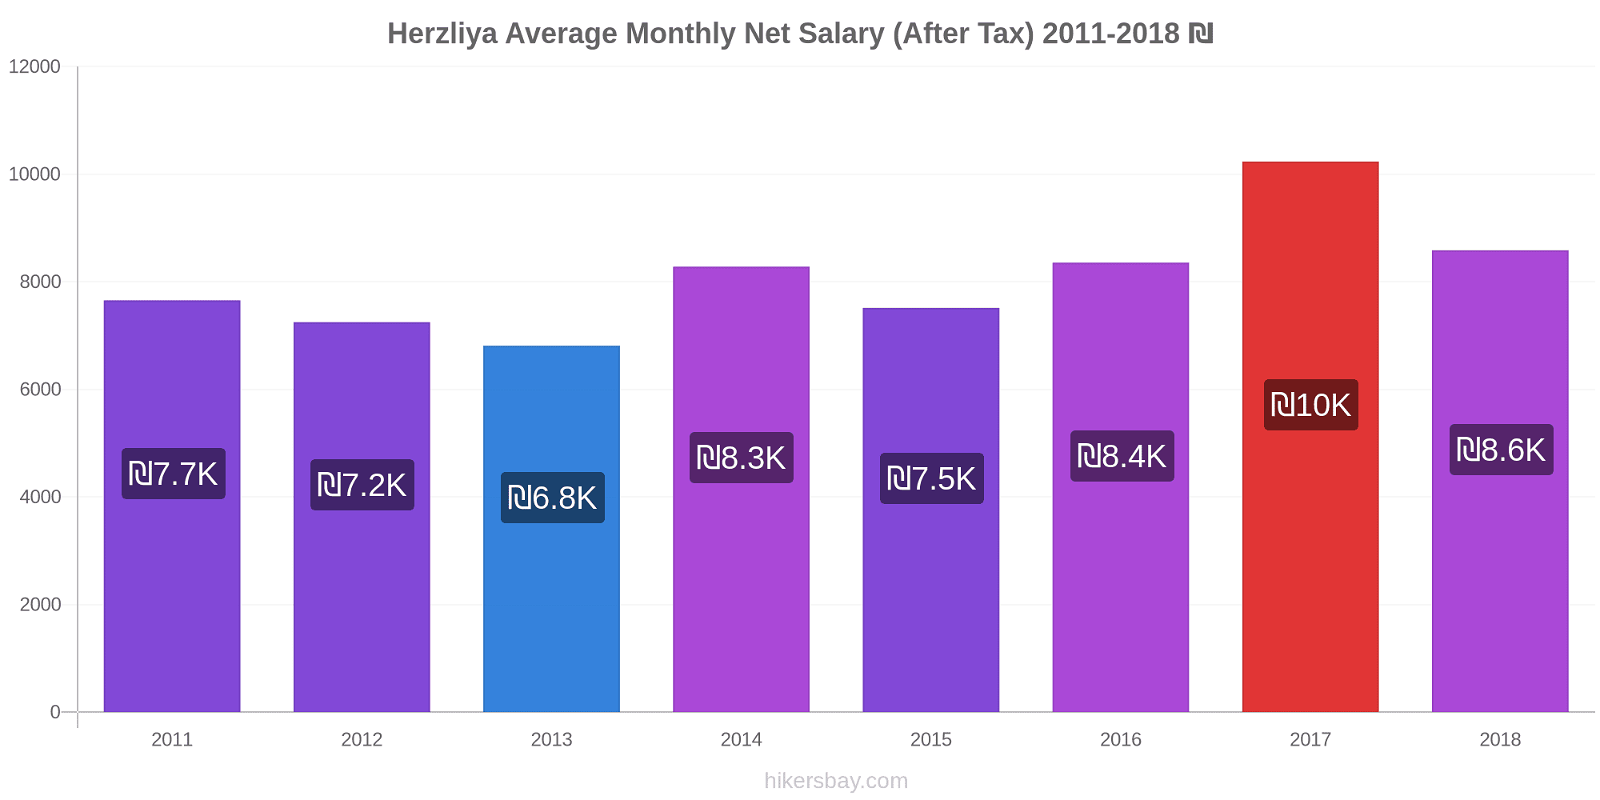 Herzliya price changes Average Monthly Net Salary (After Tax) hikersbay.com